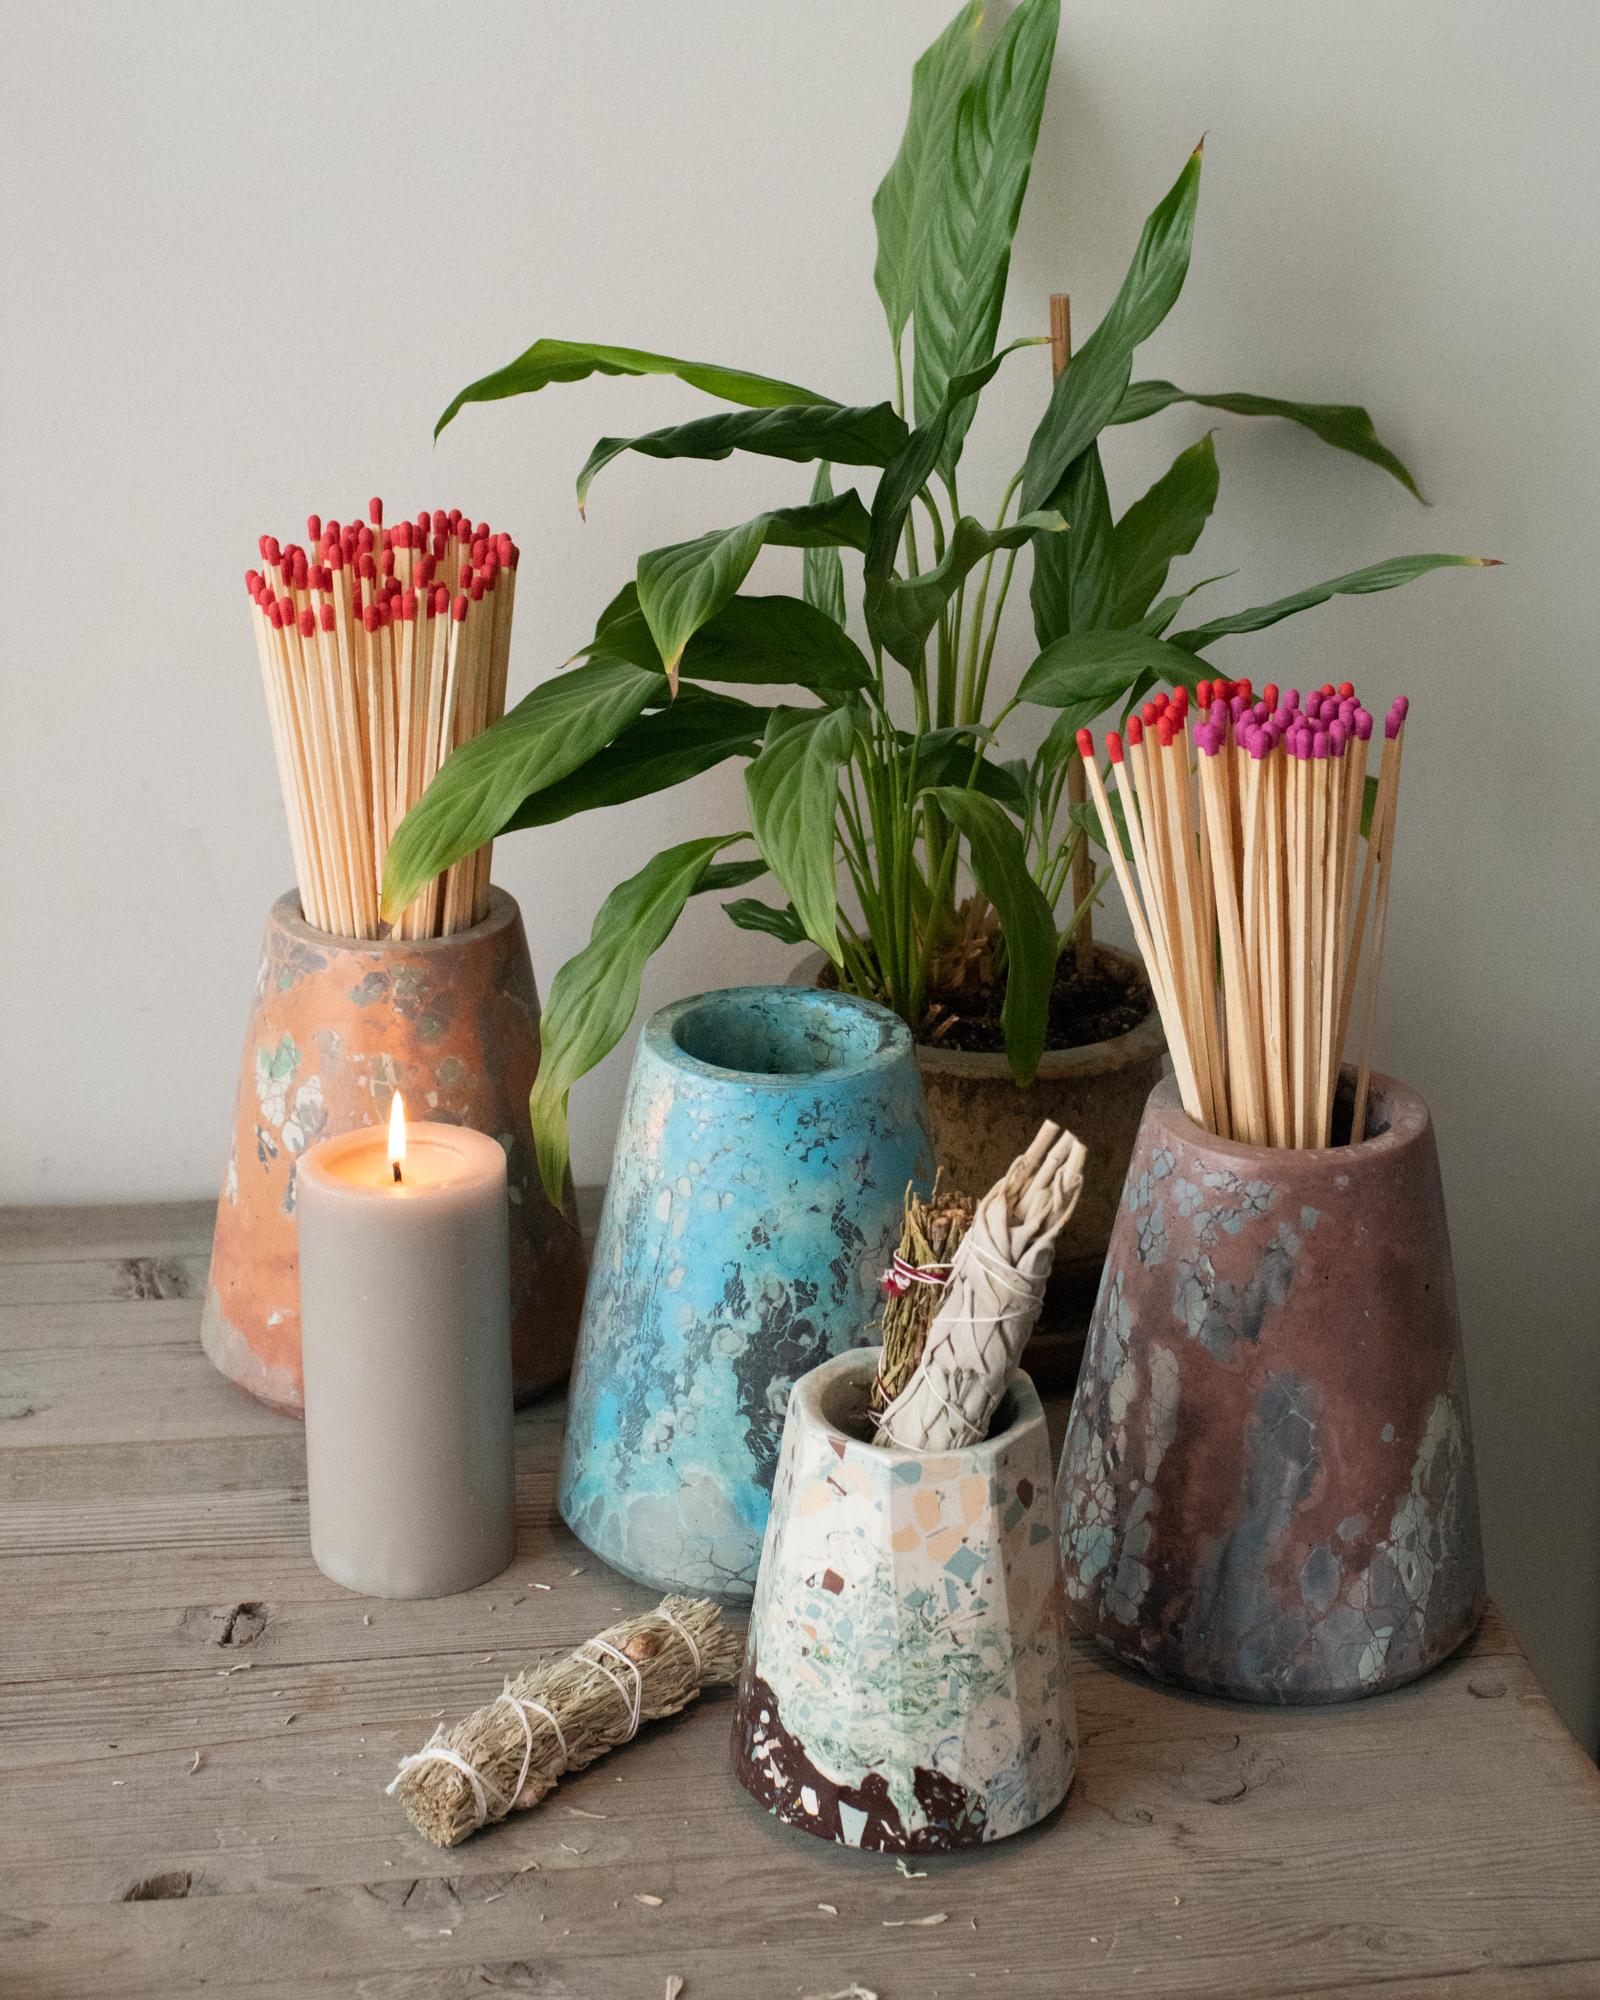 Cast Vesta Concrete Vase in Detritus Pattern, Handmade Organic Modern Vessel in Stock For Sale